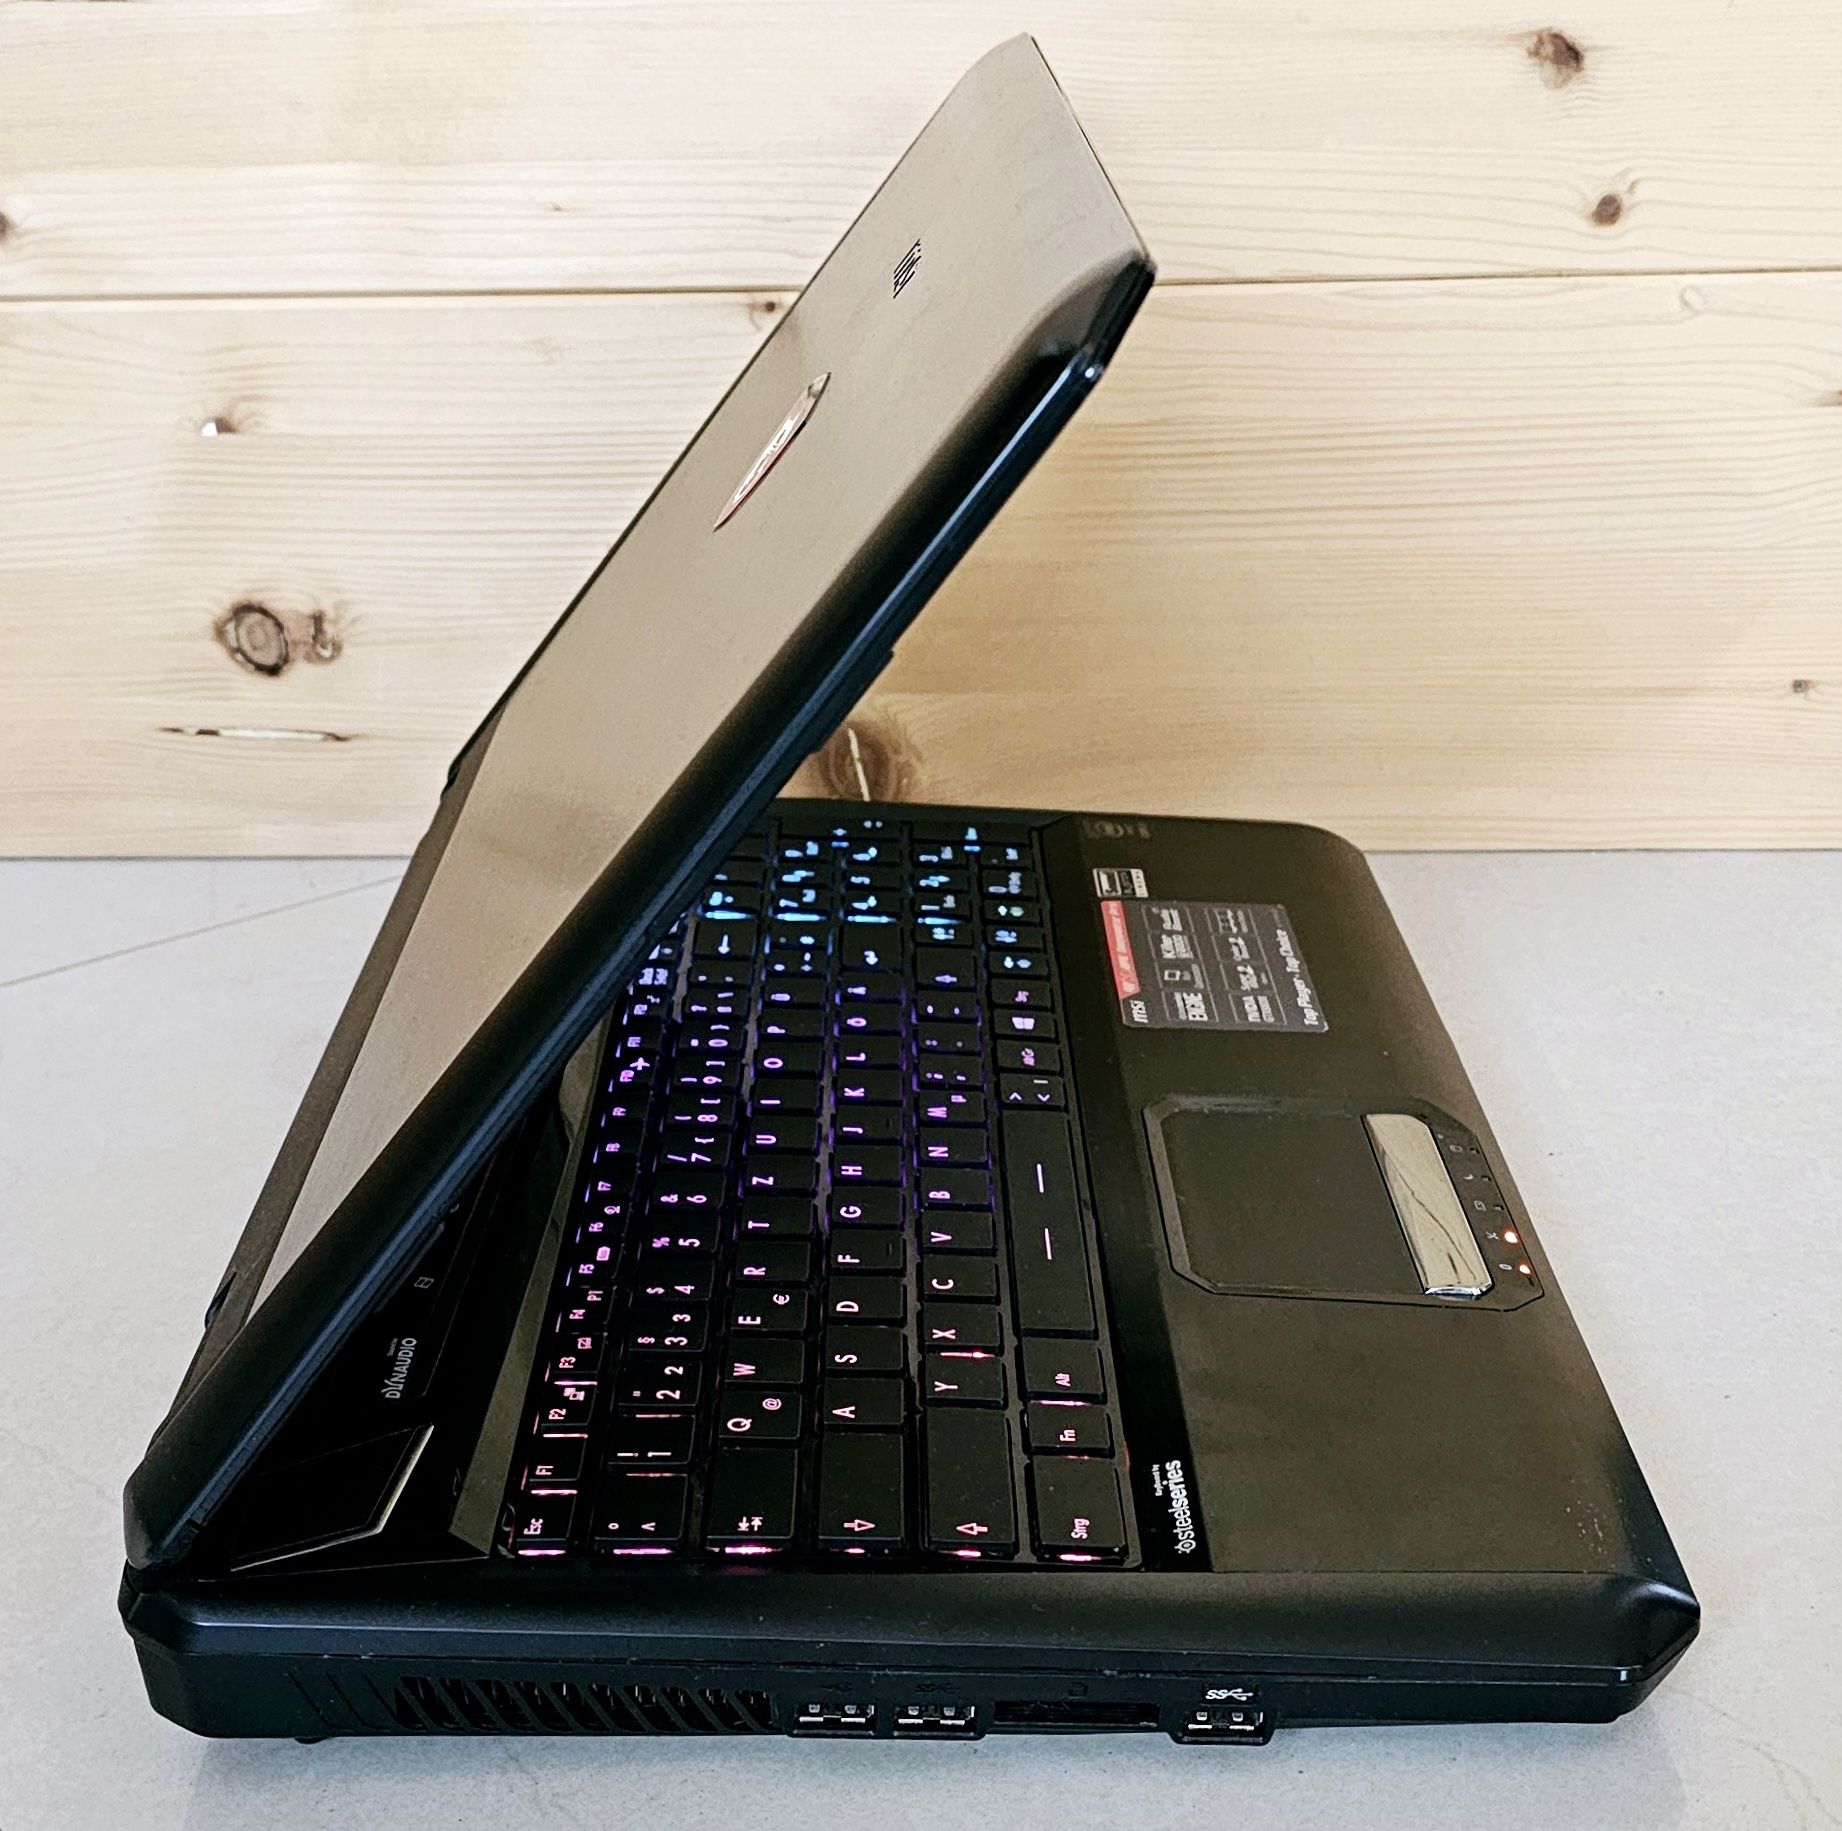 Laptop gaming MSI GT60 Dominator i7